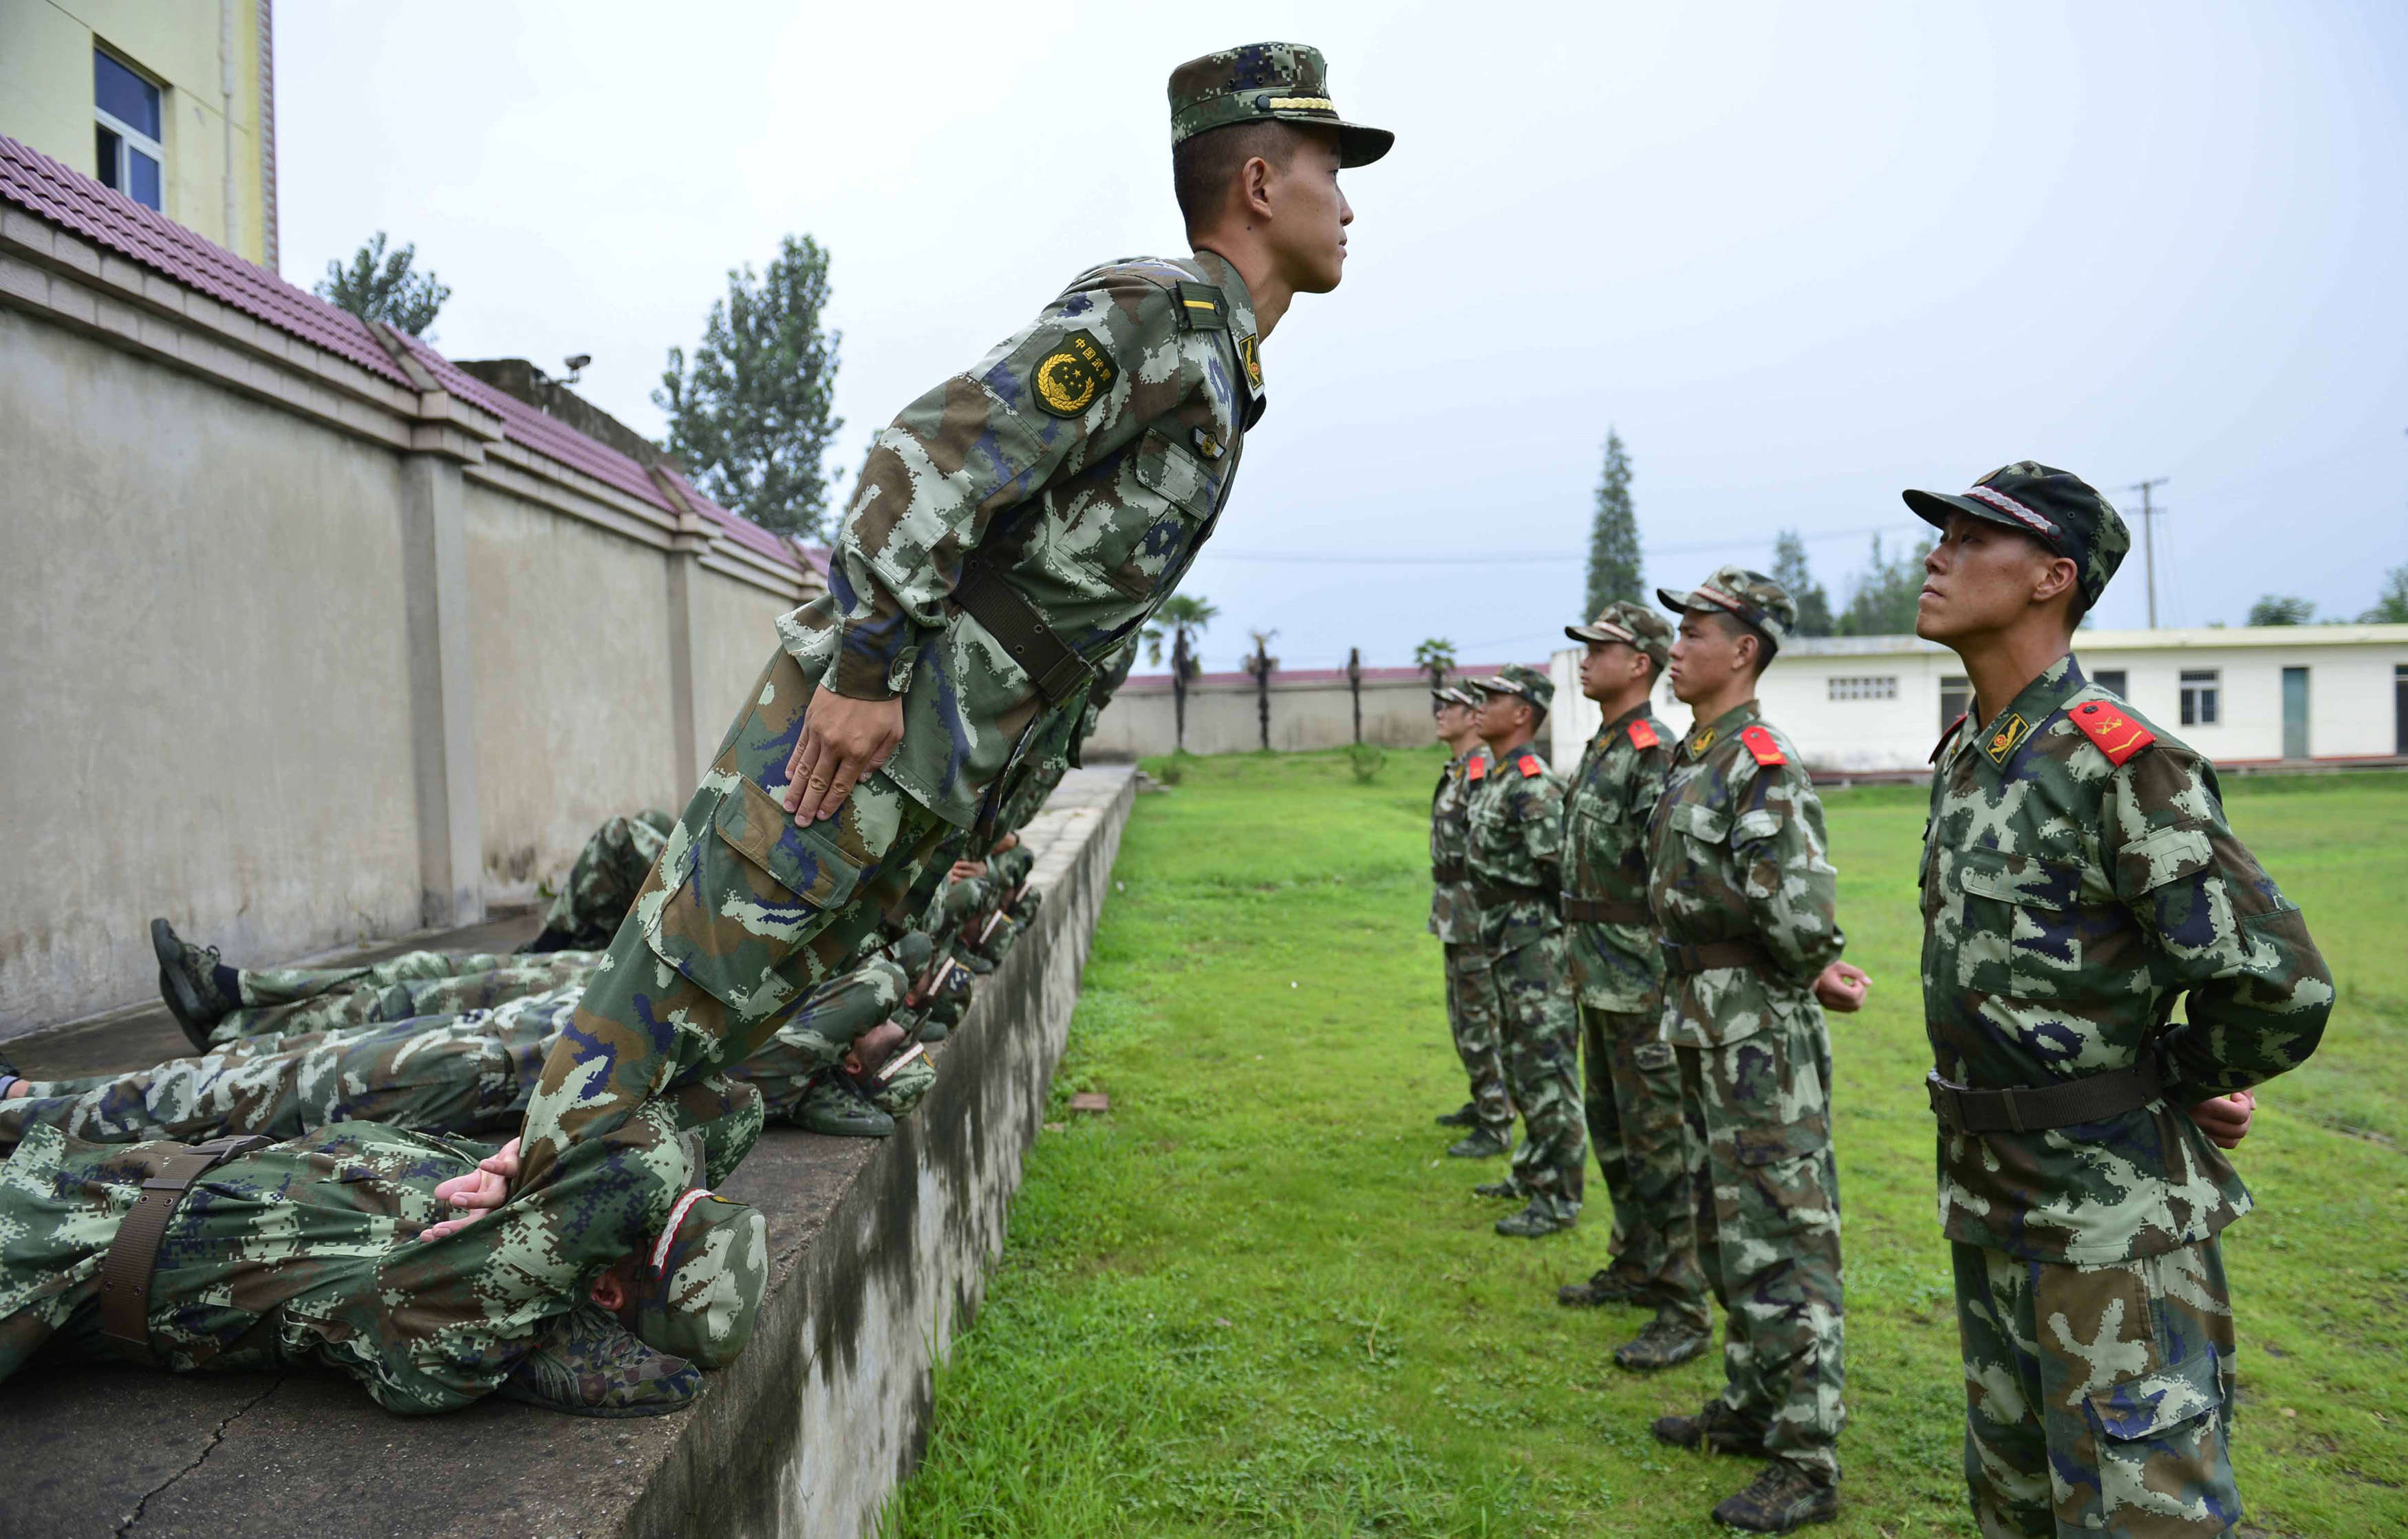 Army Ten Miler Training Program